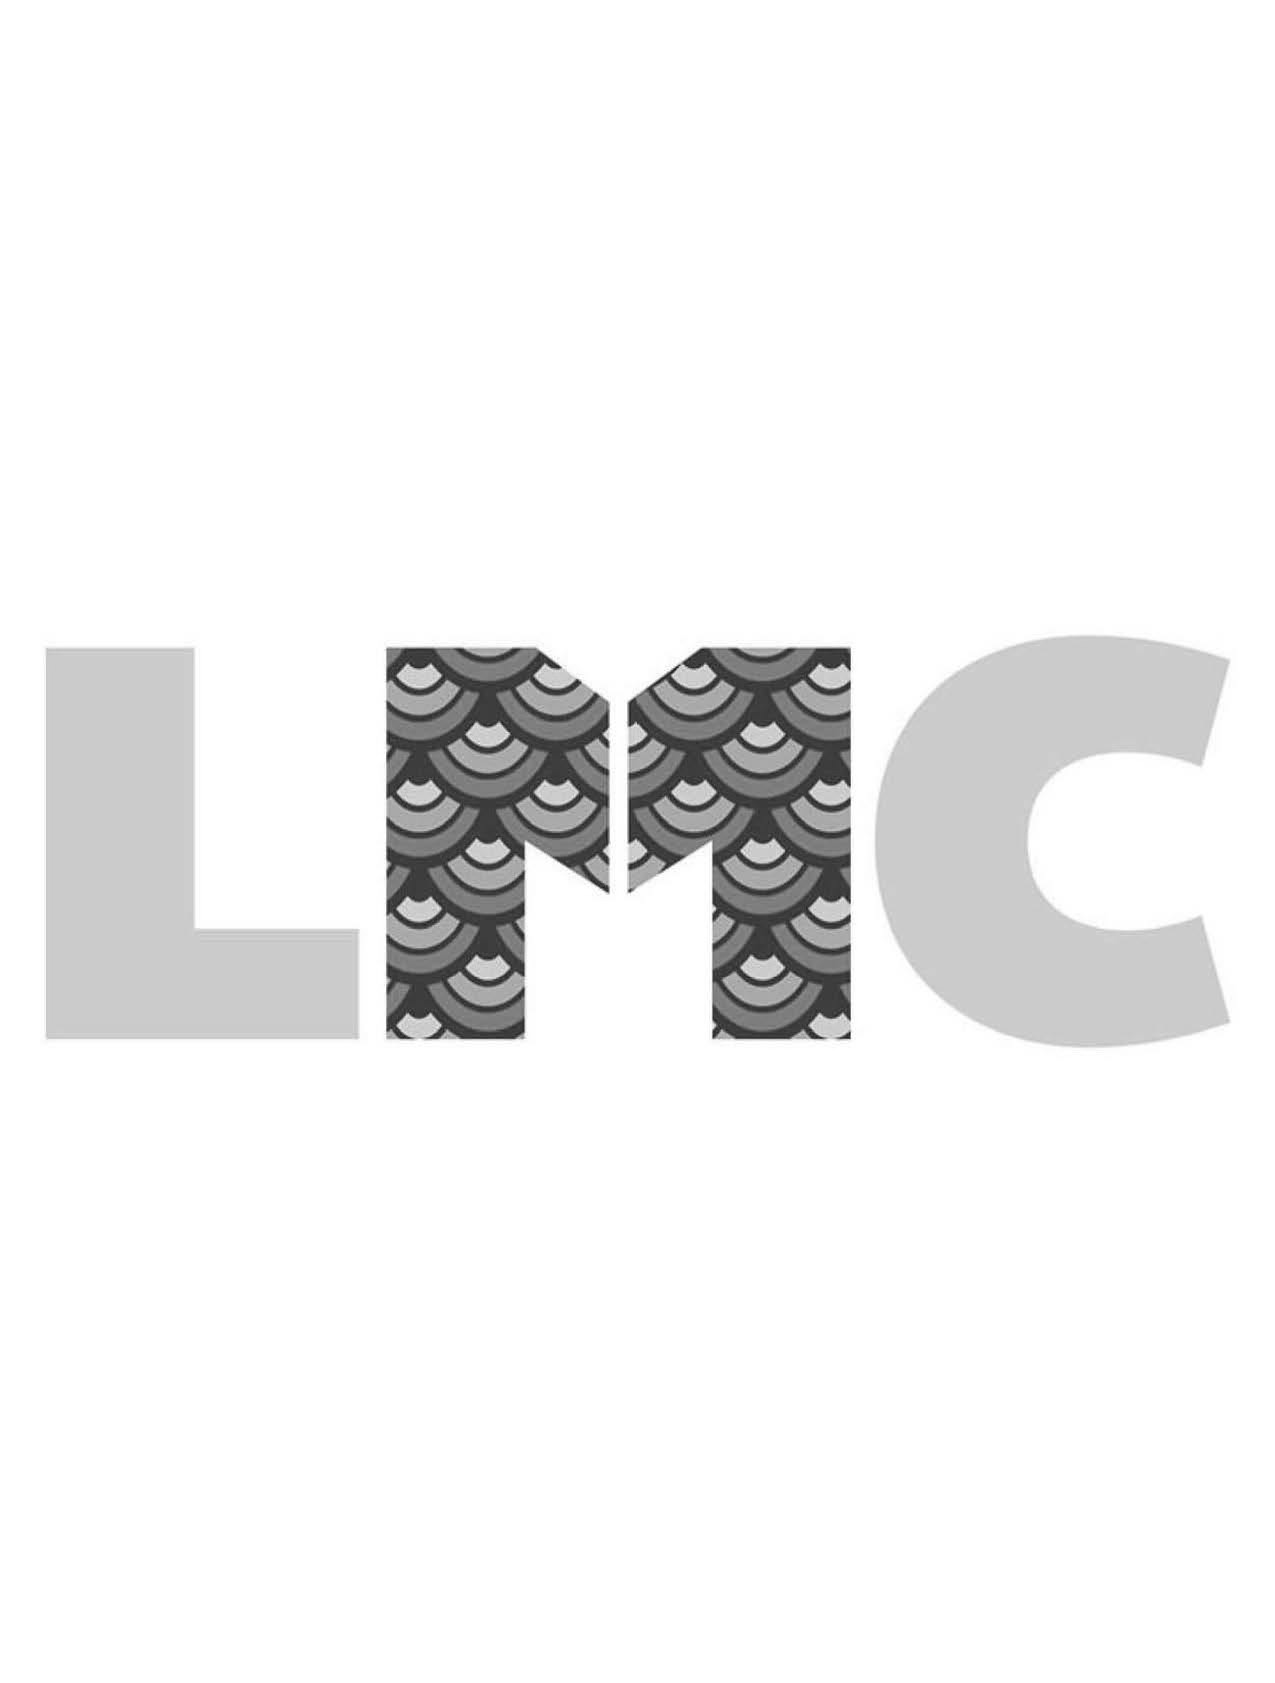 LMC Logan Manufacturing Company Trademark Registration